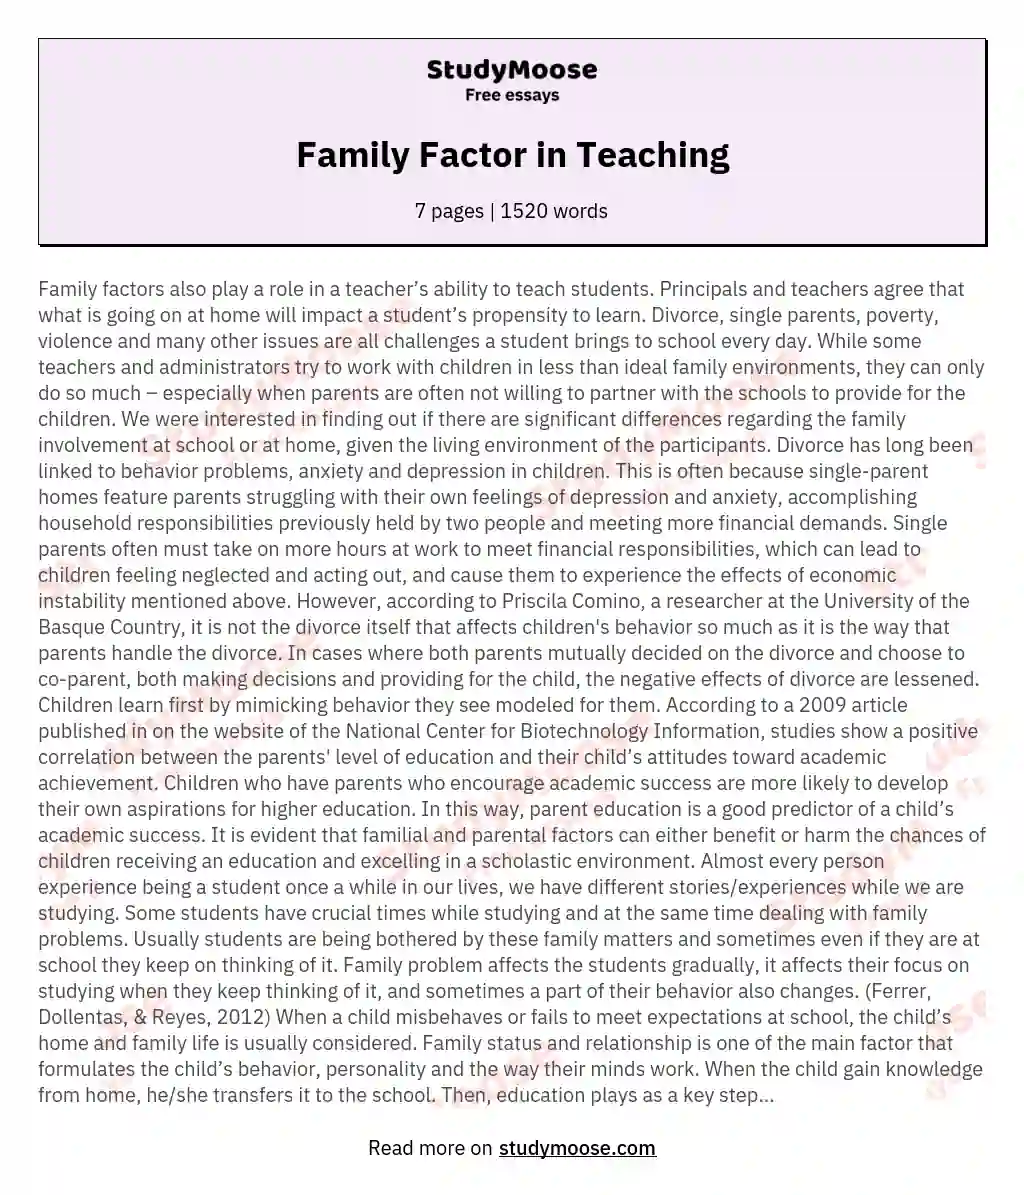 Family Factor in Teaching essay